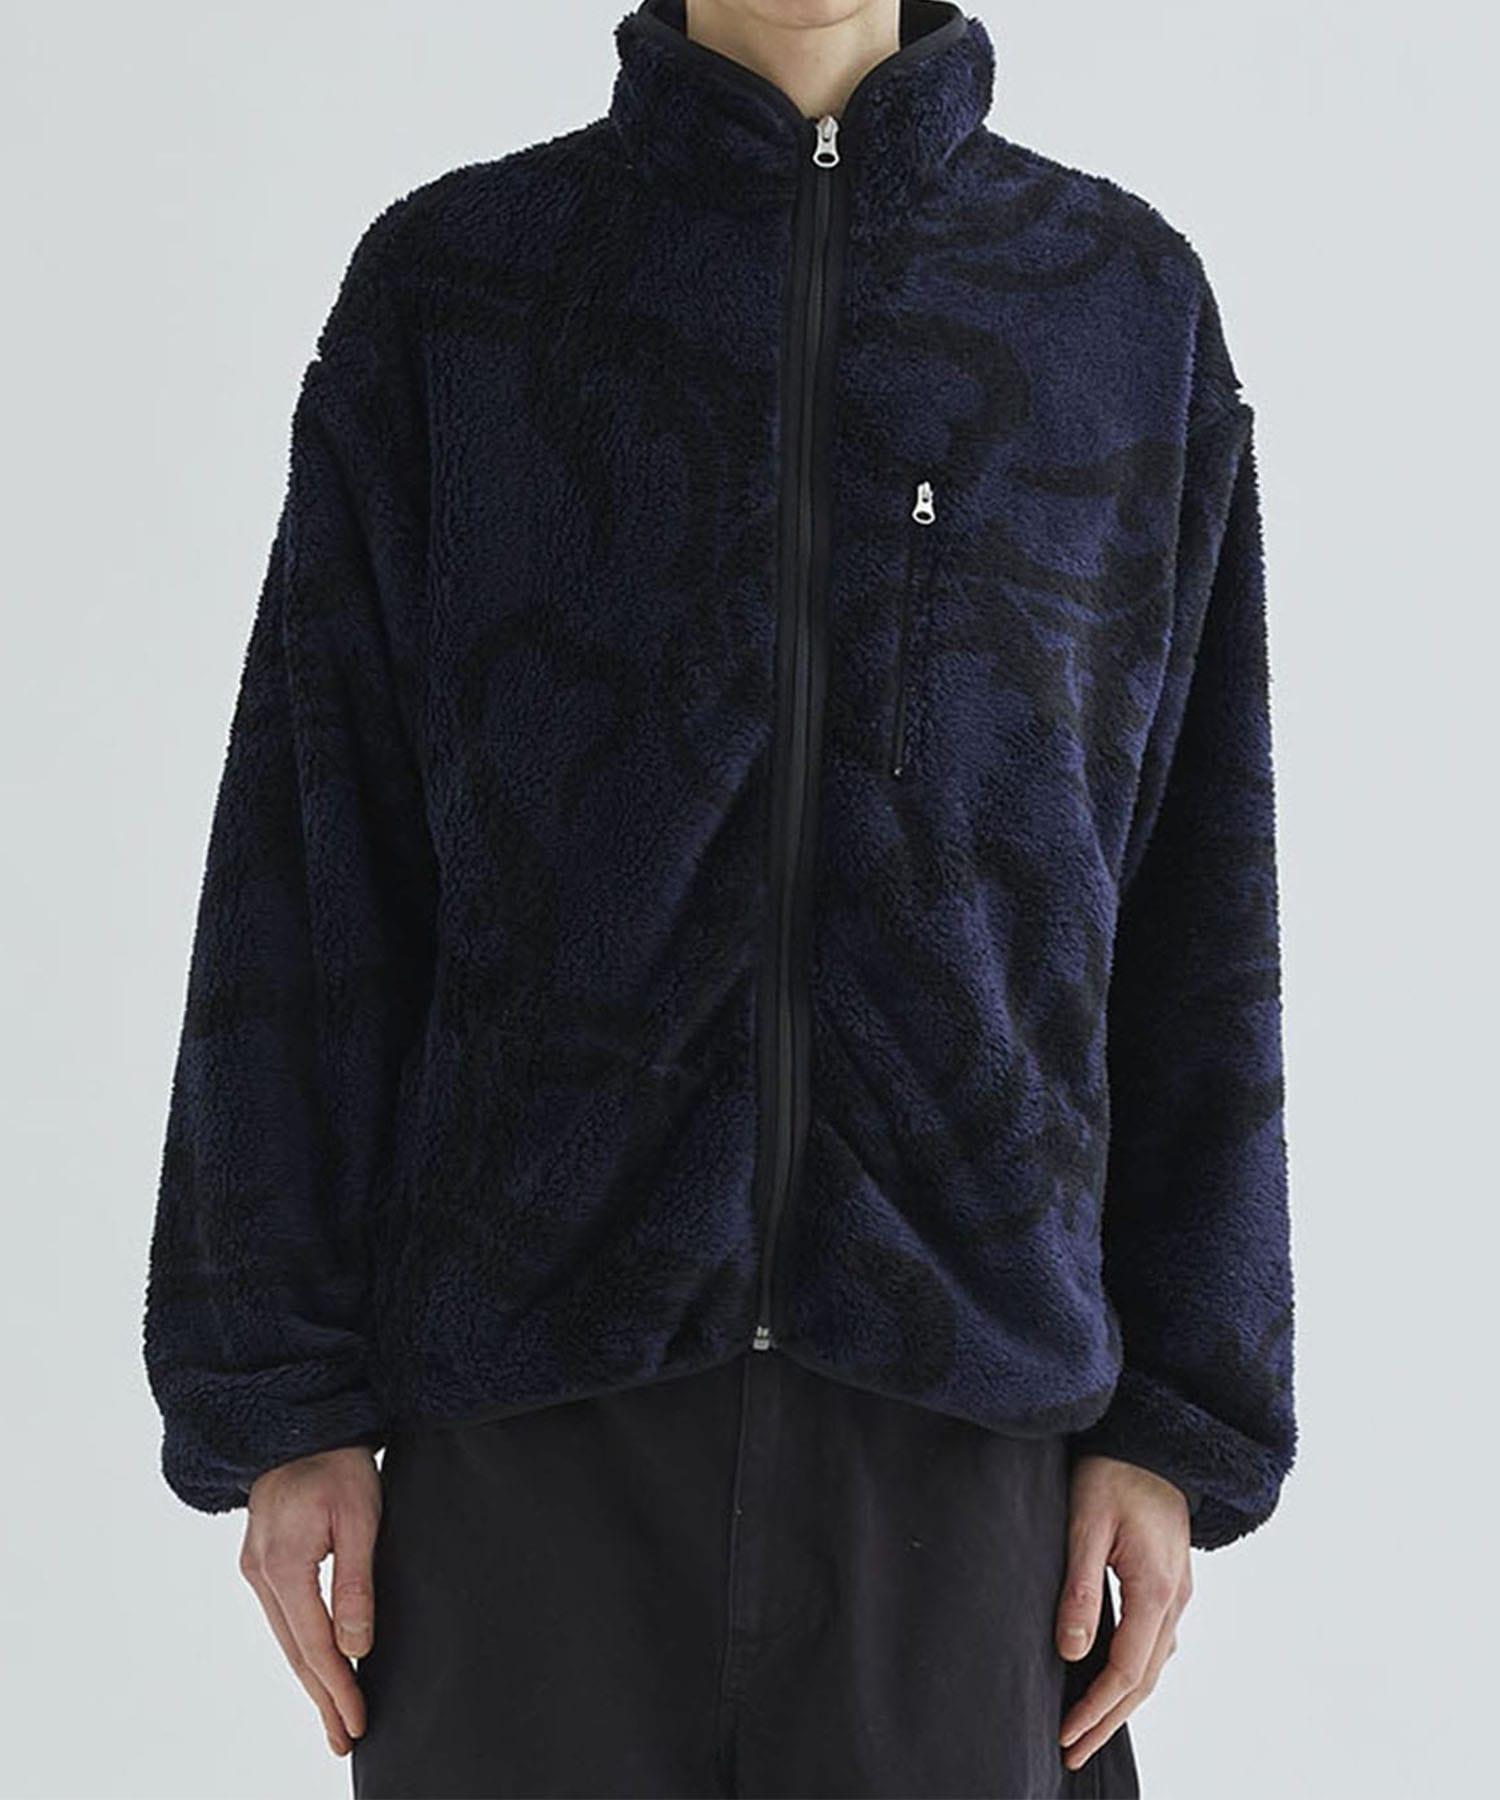 Redhill Camo Fleece Jacket